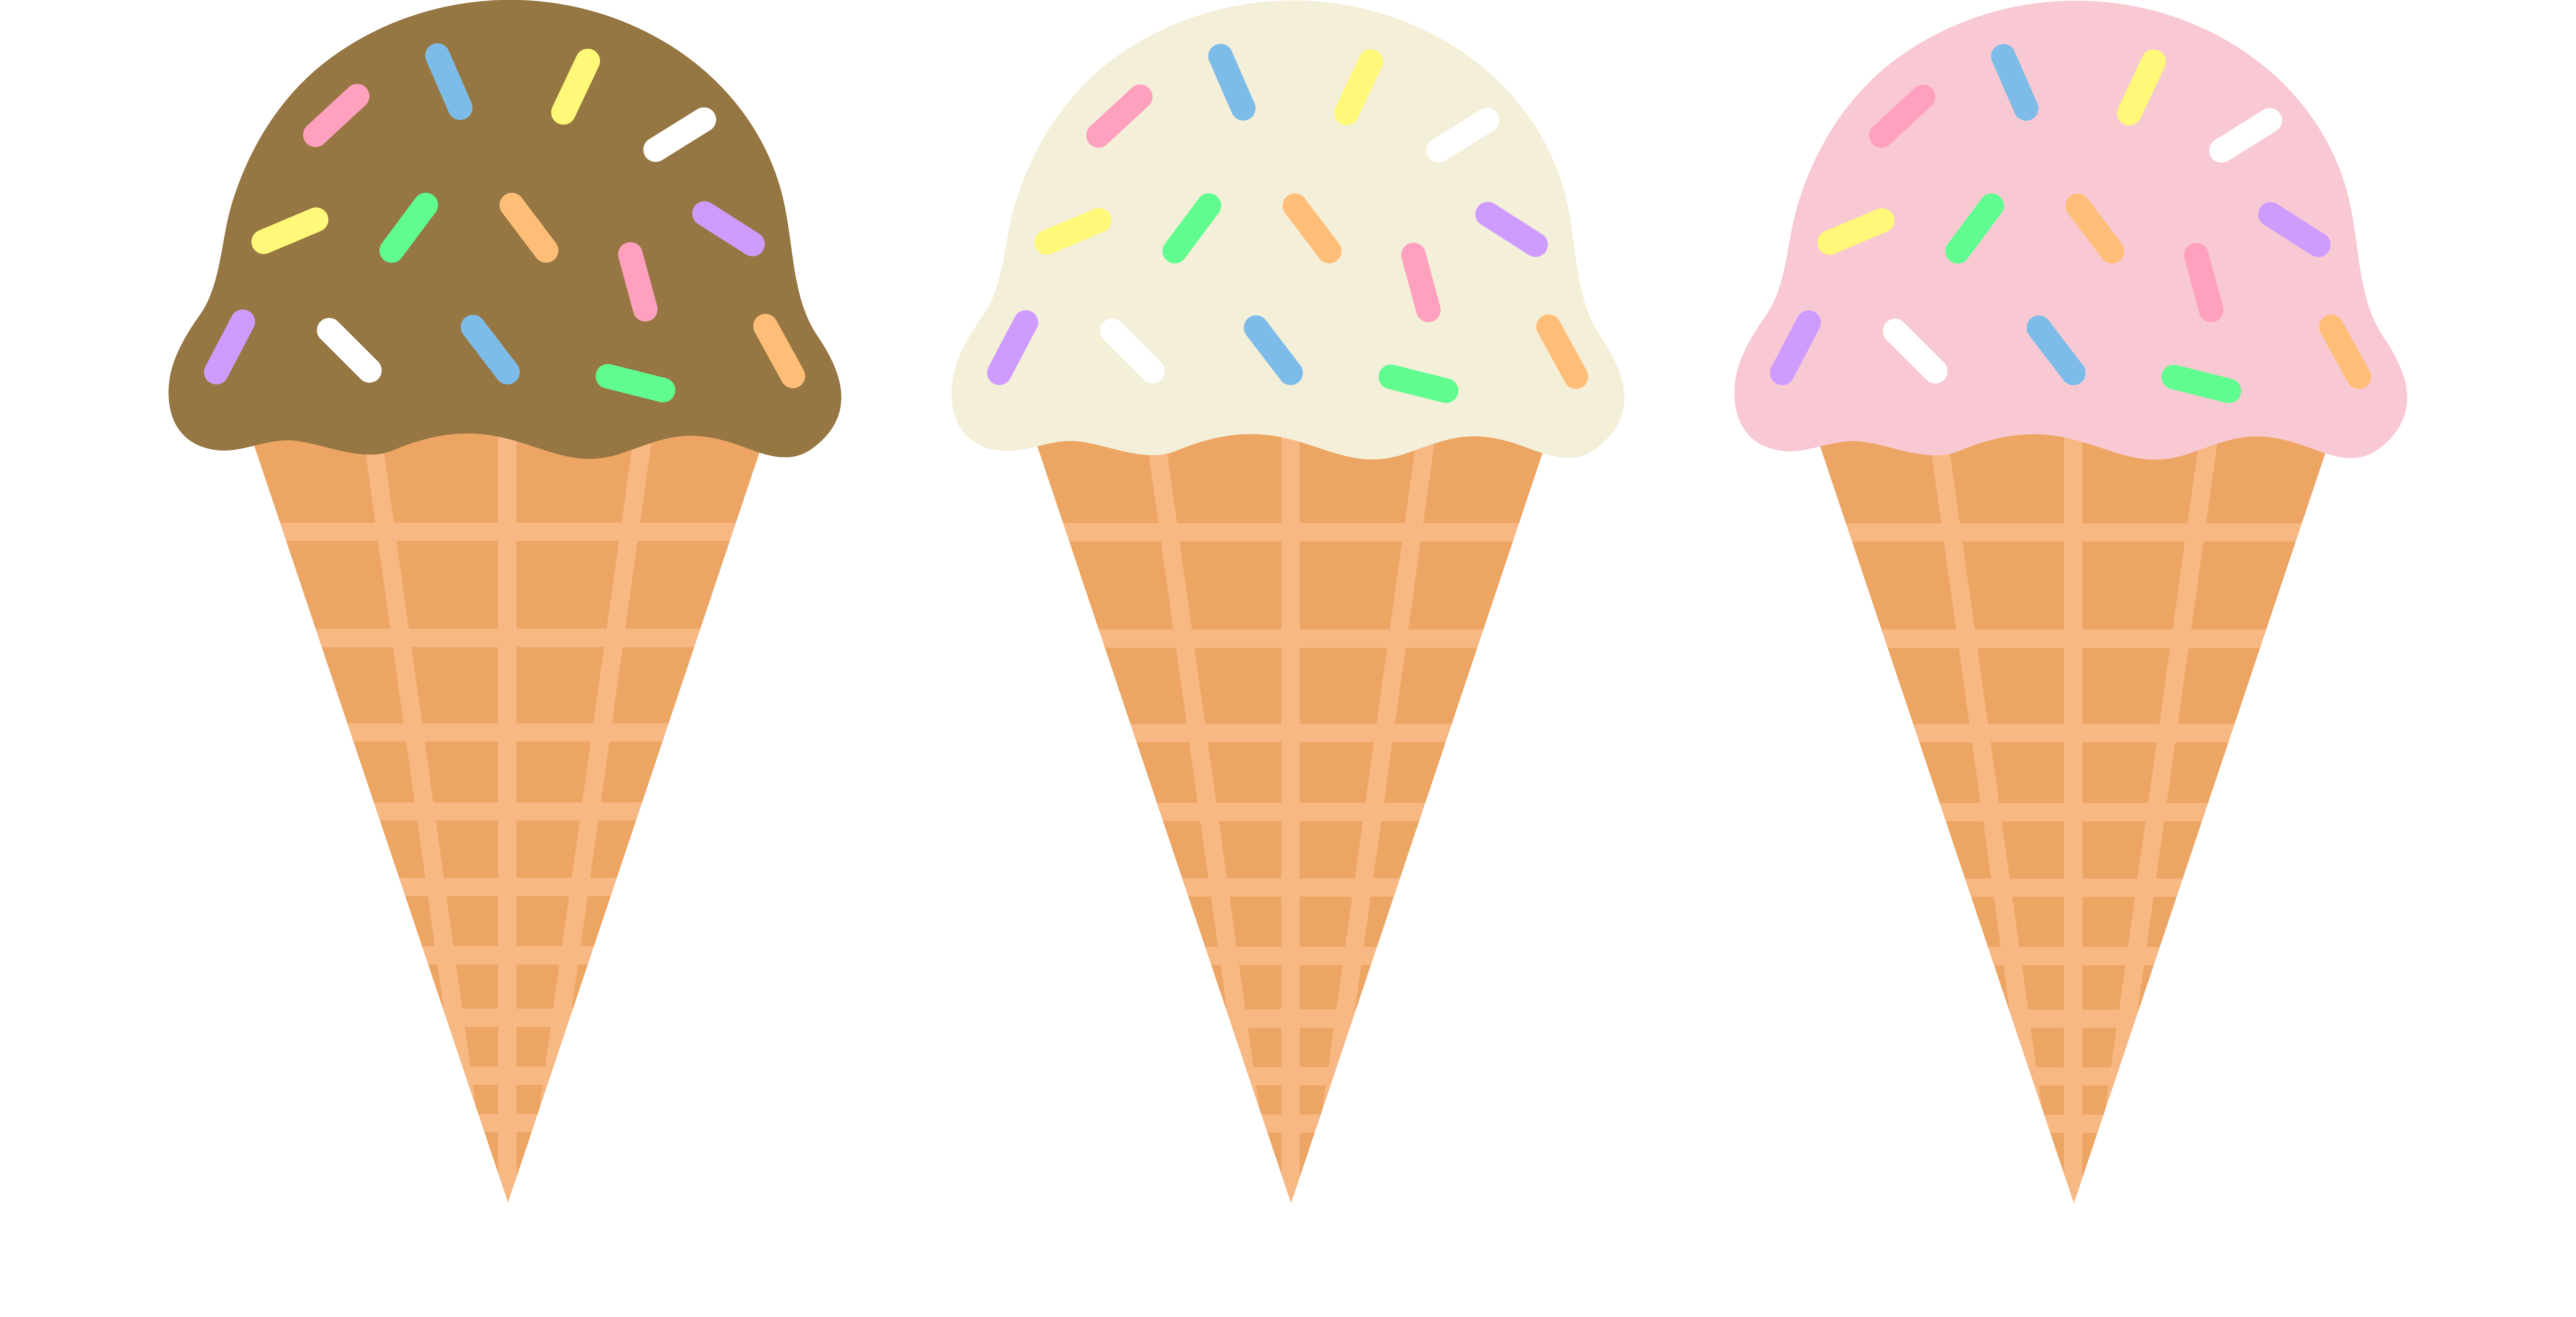 free-images-of-ice-cream-cones-download-free-images-of-ice-cream-cones